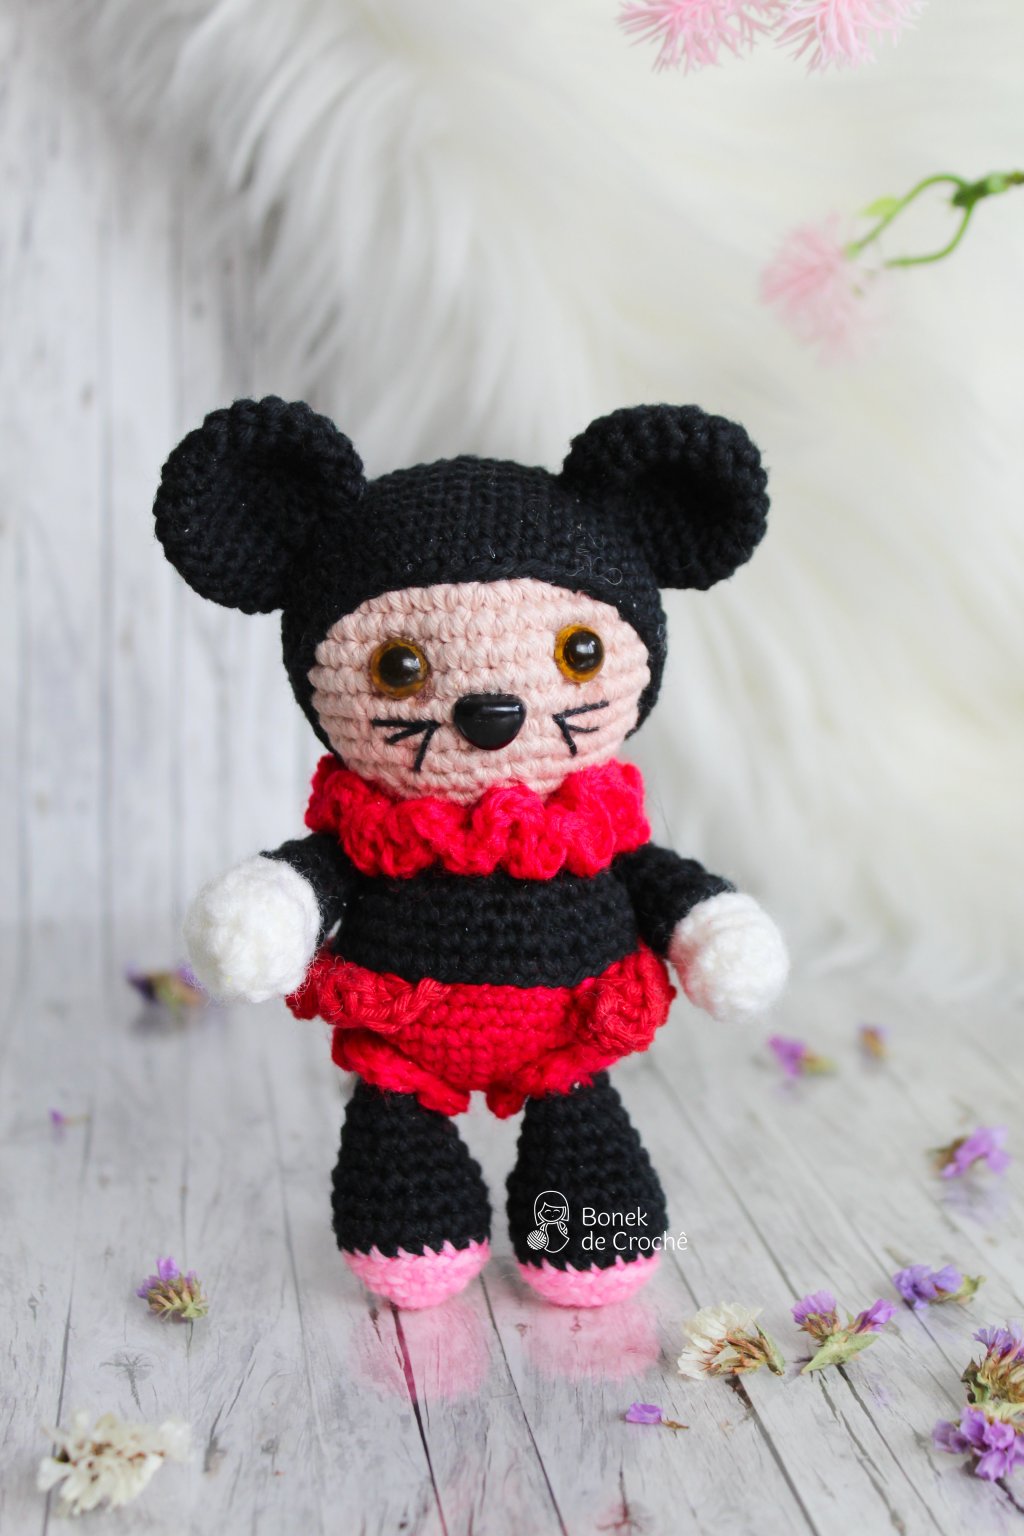 Jolie the mouse crochet doll